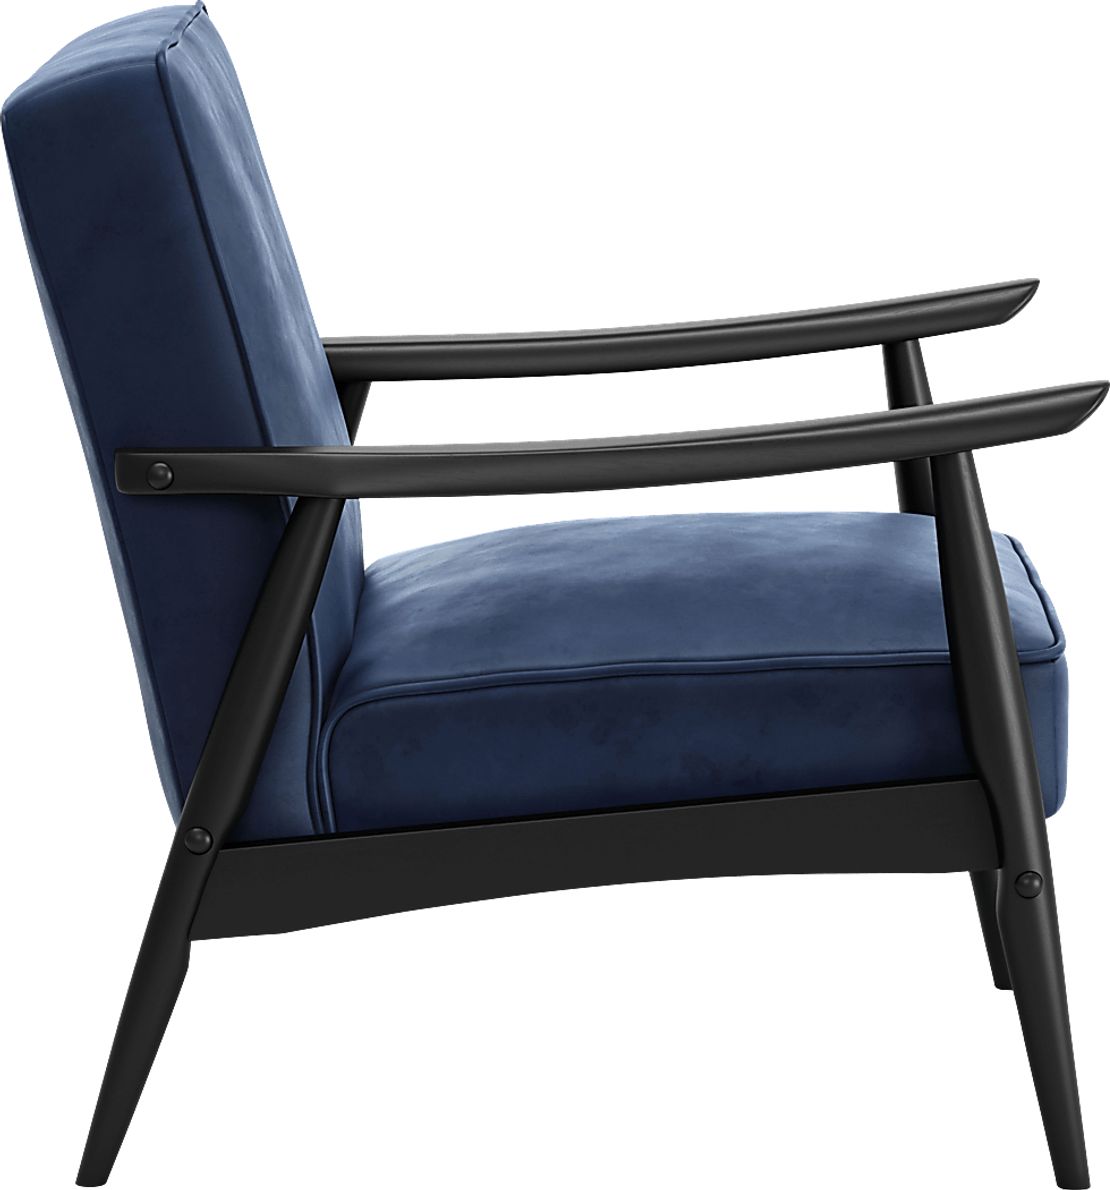 Beringer Accent Chair